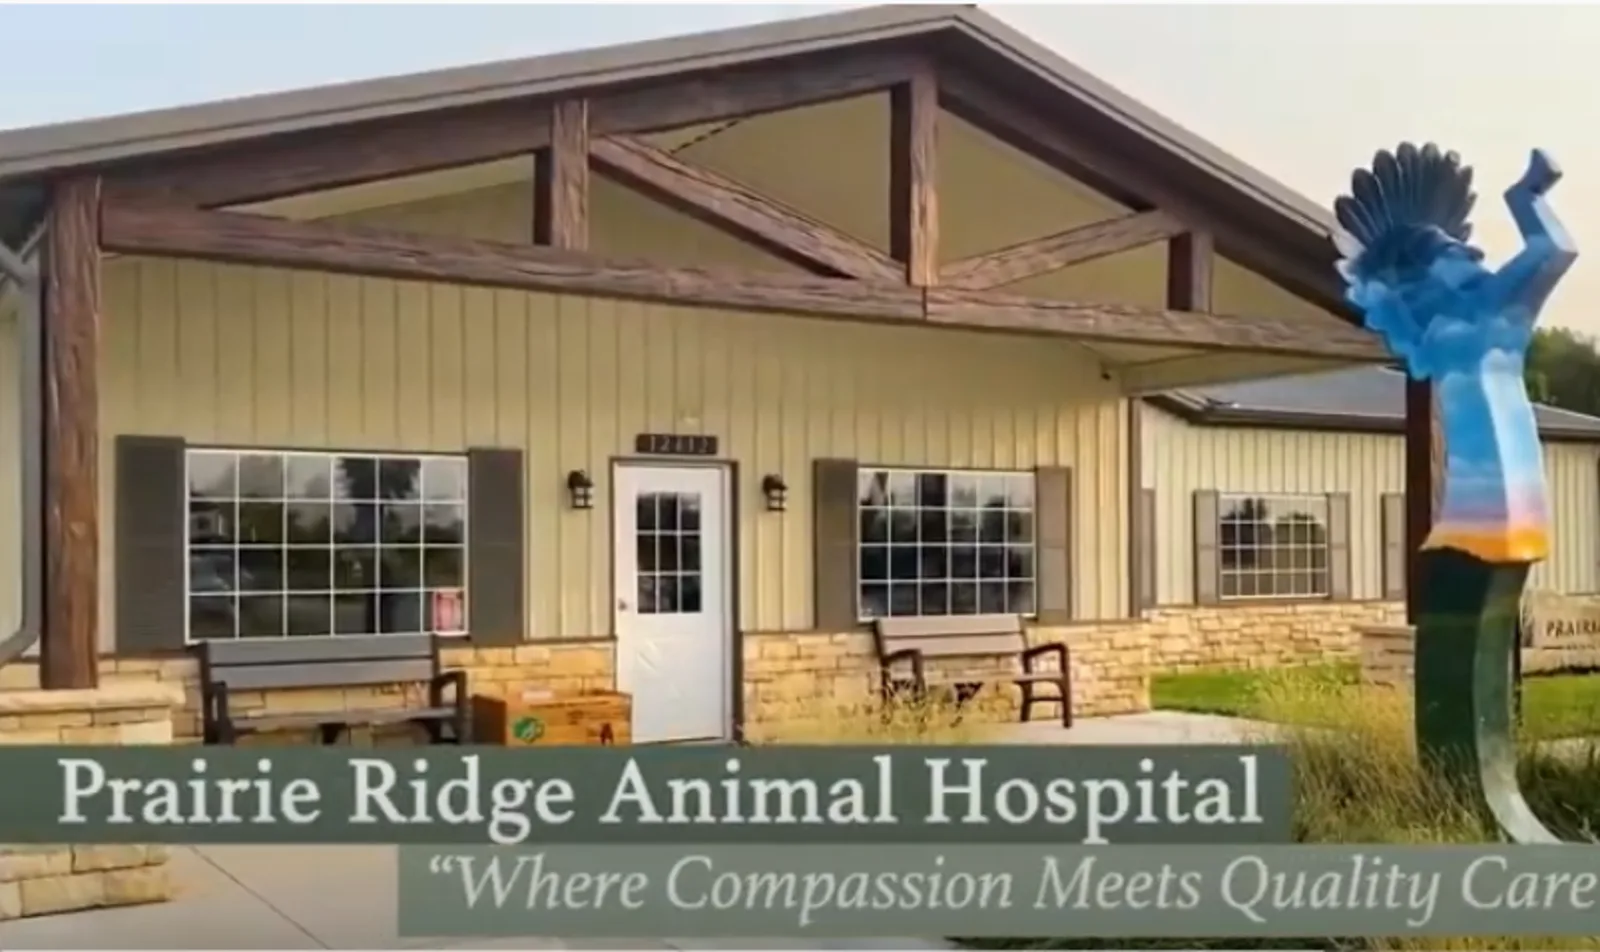 Prairie Ridge Animal Hospital YouTube Video